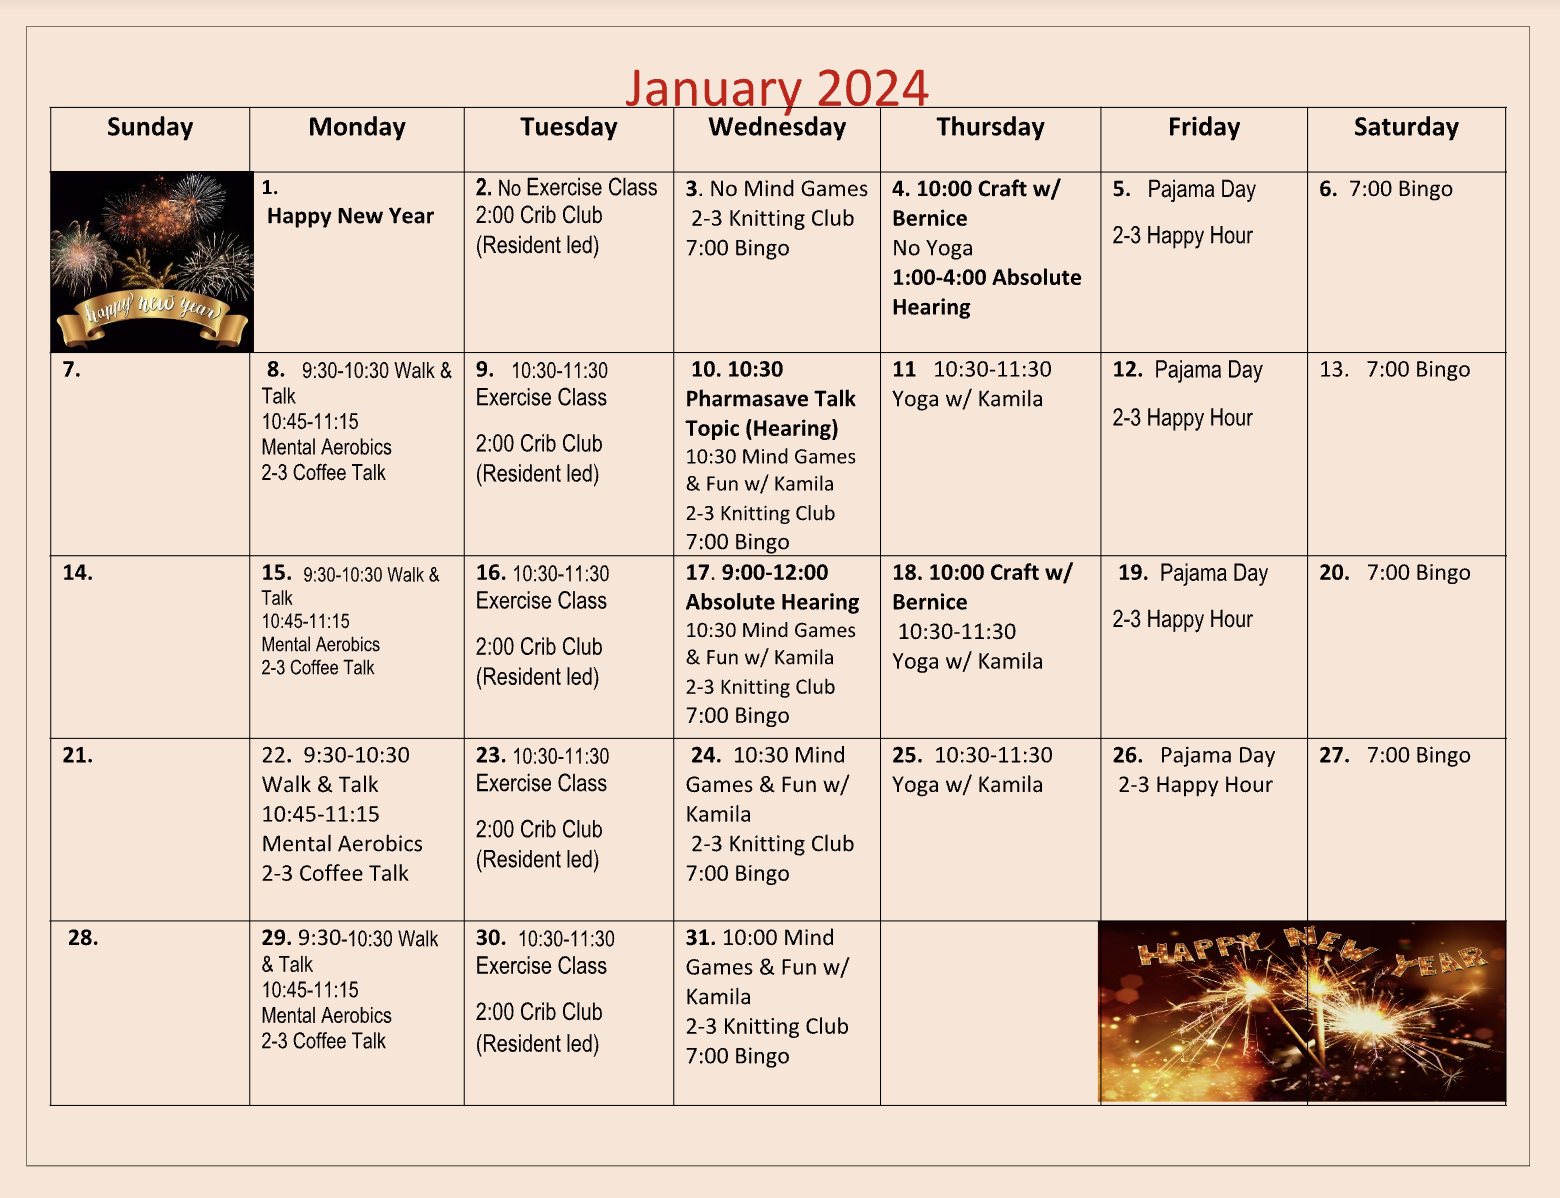 Arbourside January calendar